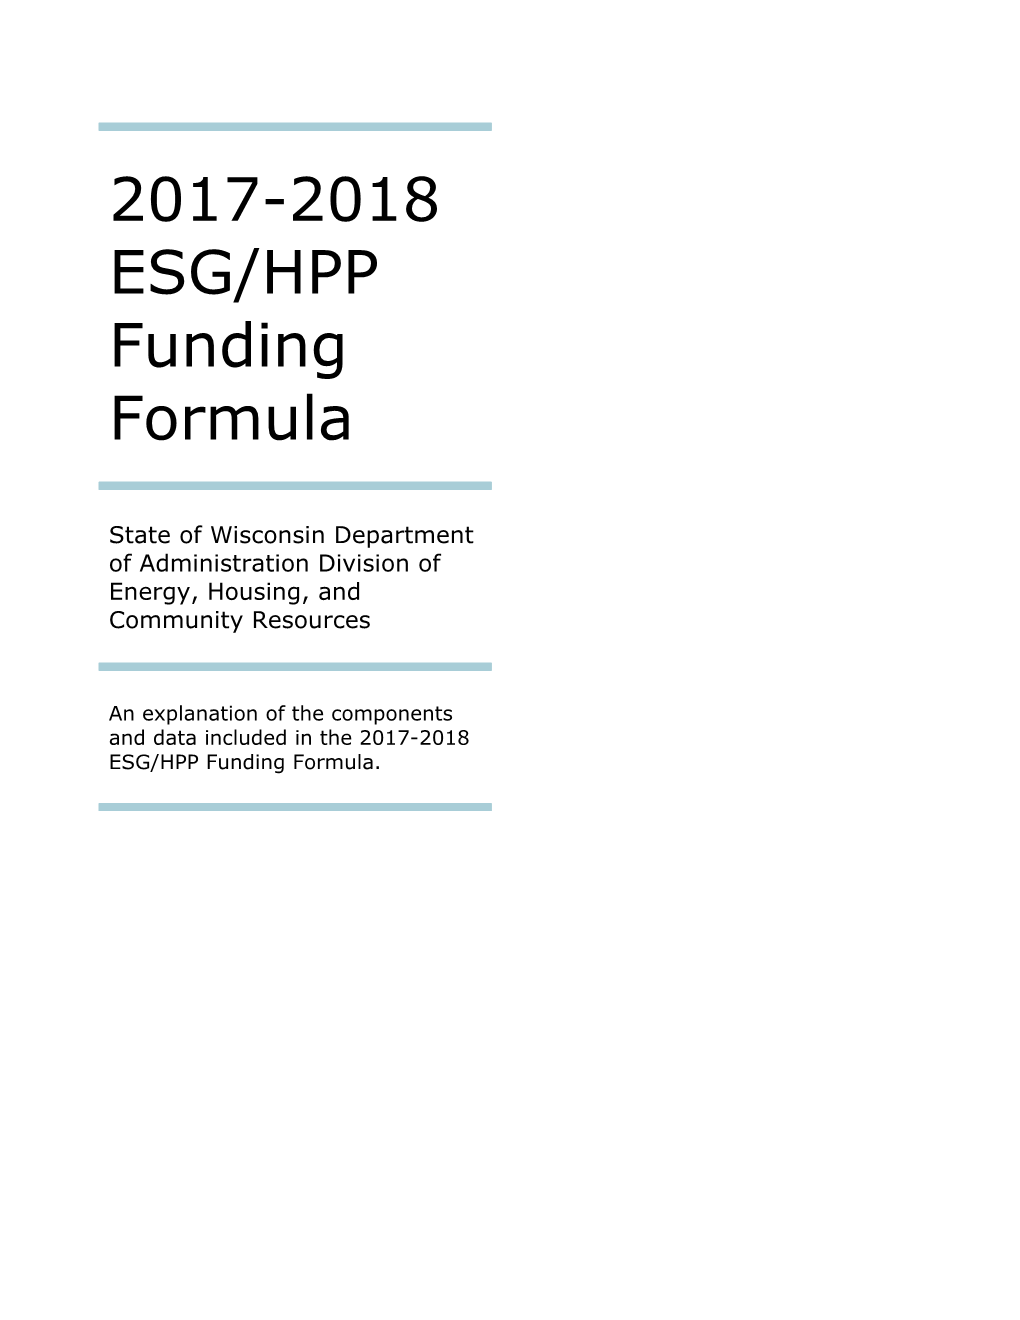 2017-2018 ESG/HPP Funding Formula